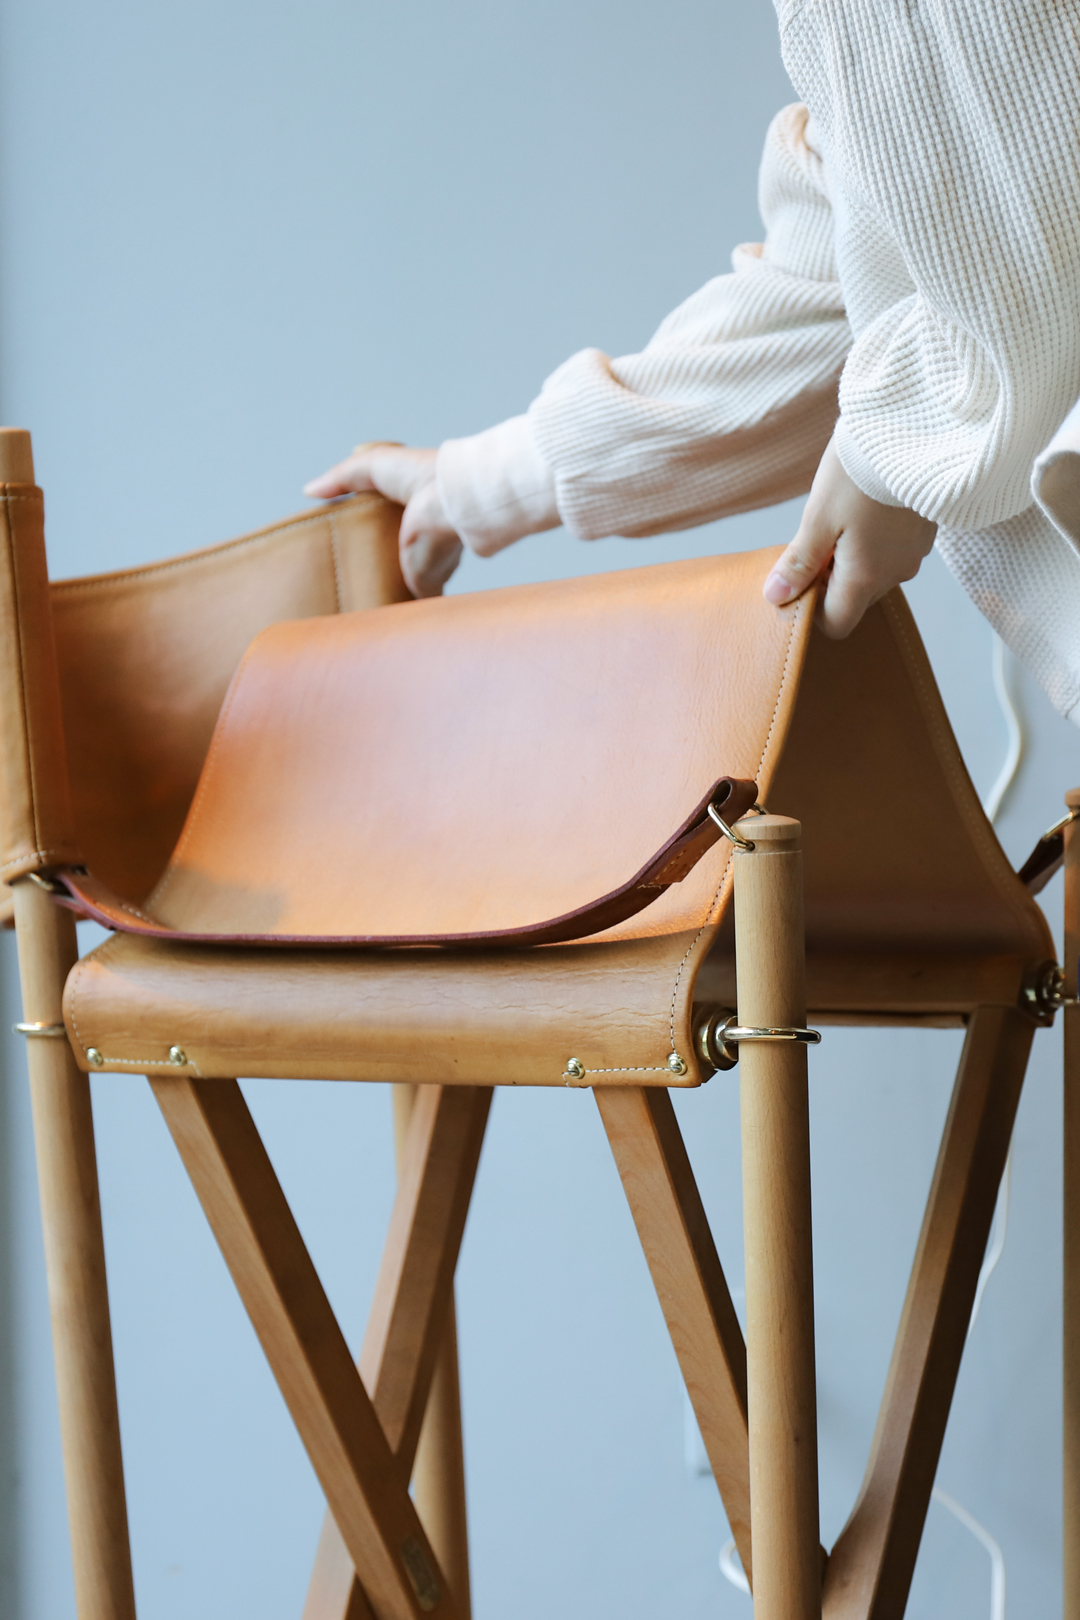 Mogens Koch Folding Chair MK16 Rud. Rasmussen/モーエンス・コッホ フォールディングチェア 折りたたみ椅子 ルド・ラスムッセン 北欧家具